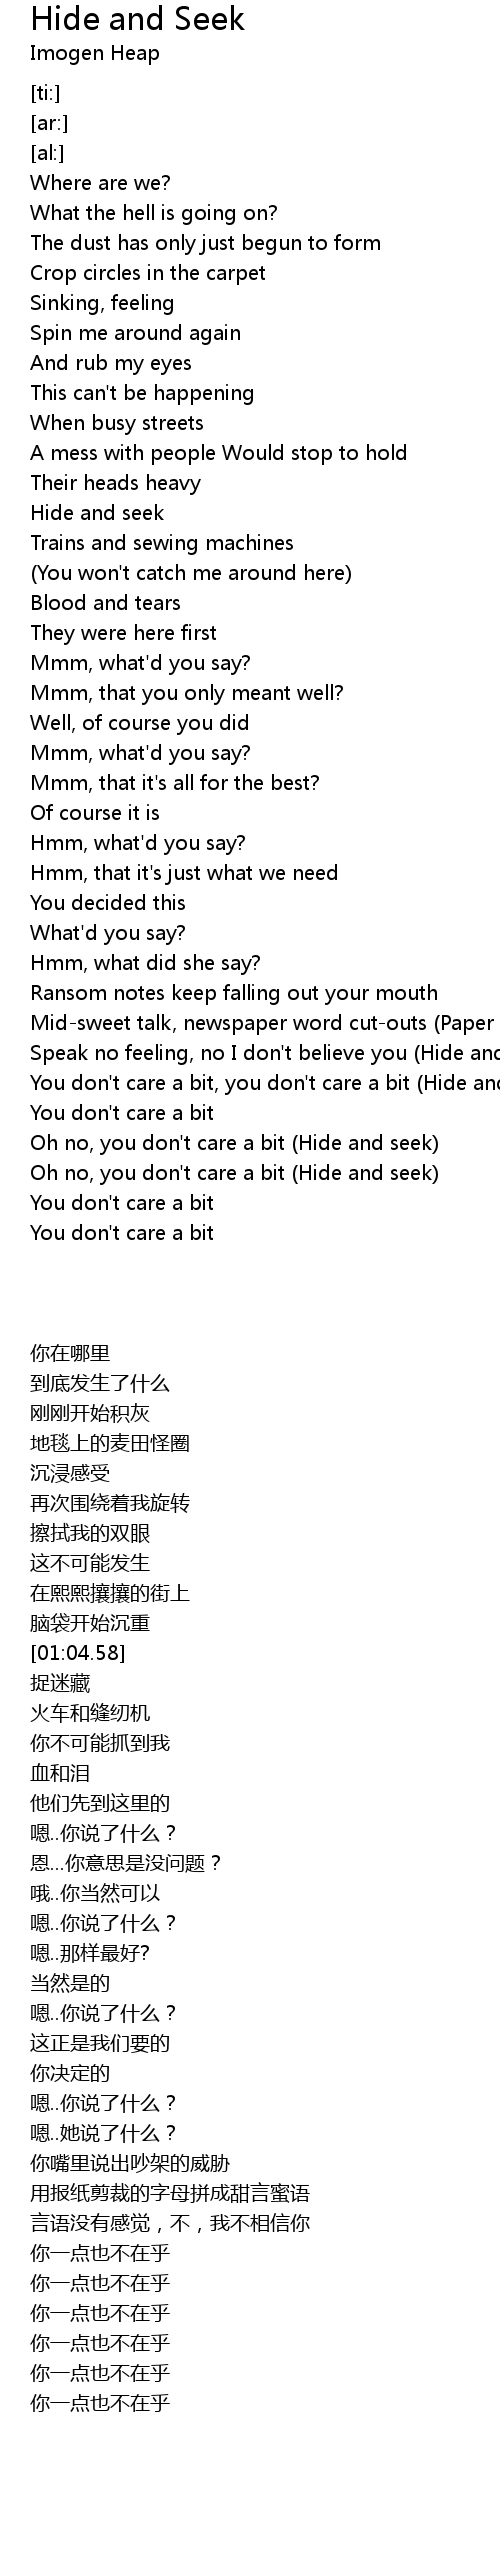 hide and seek song lyrics｜TikTok Search